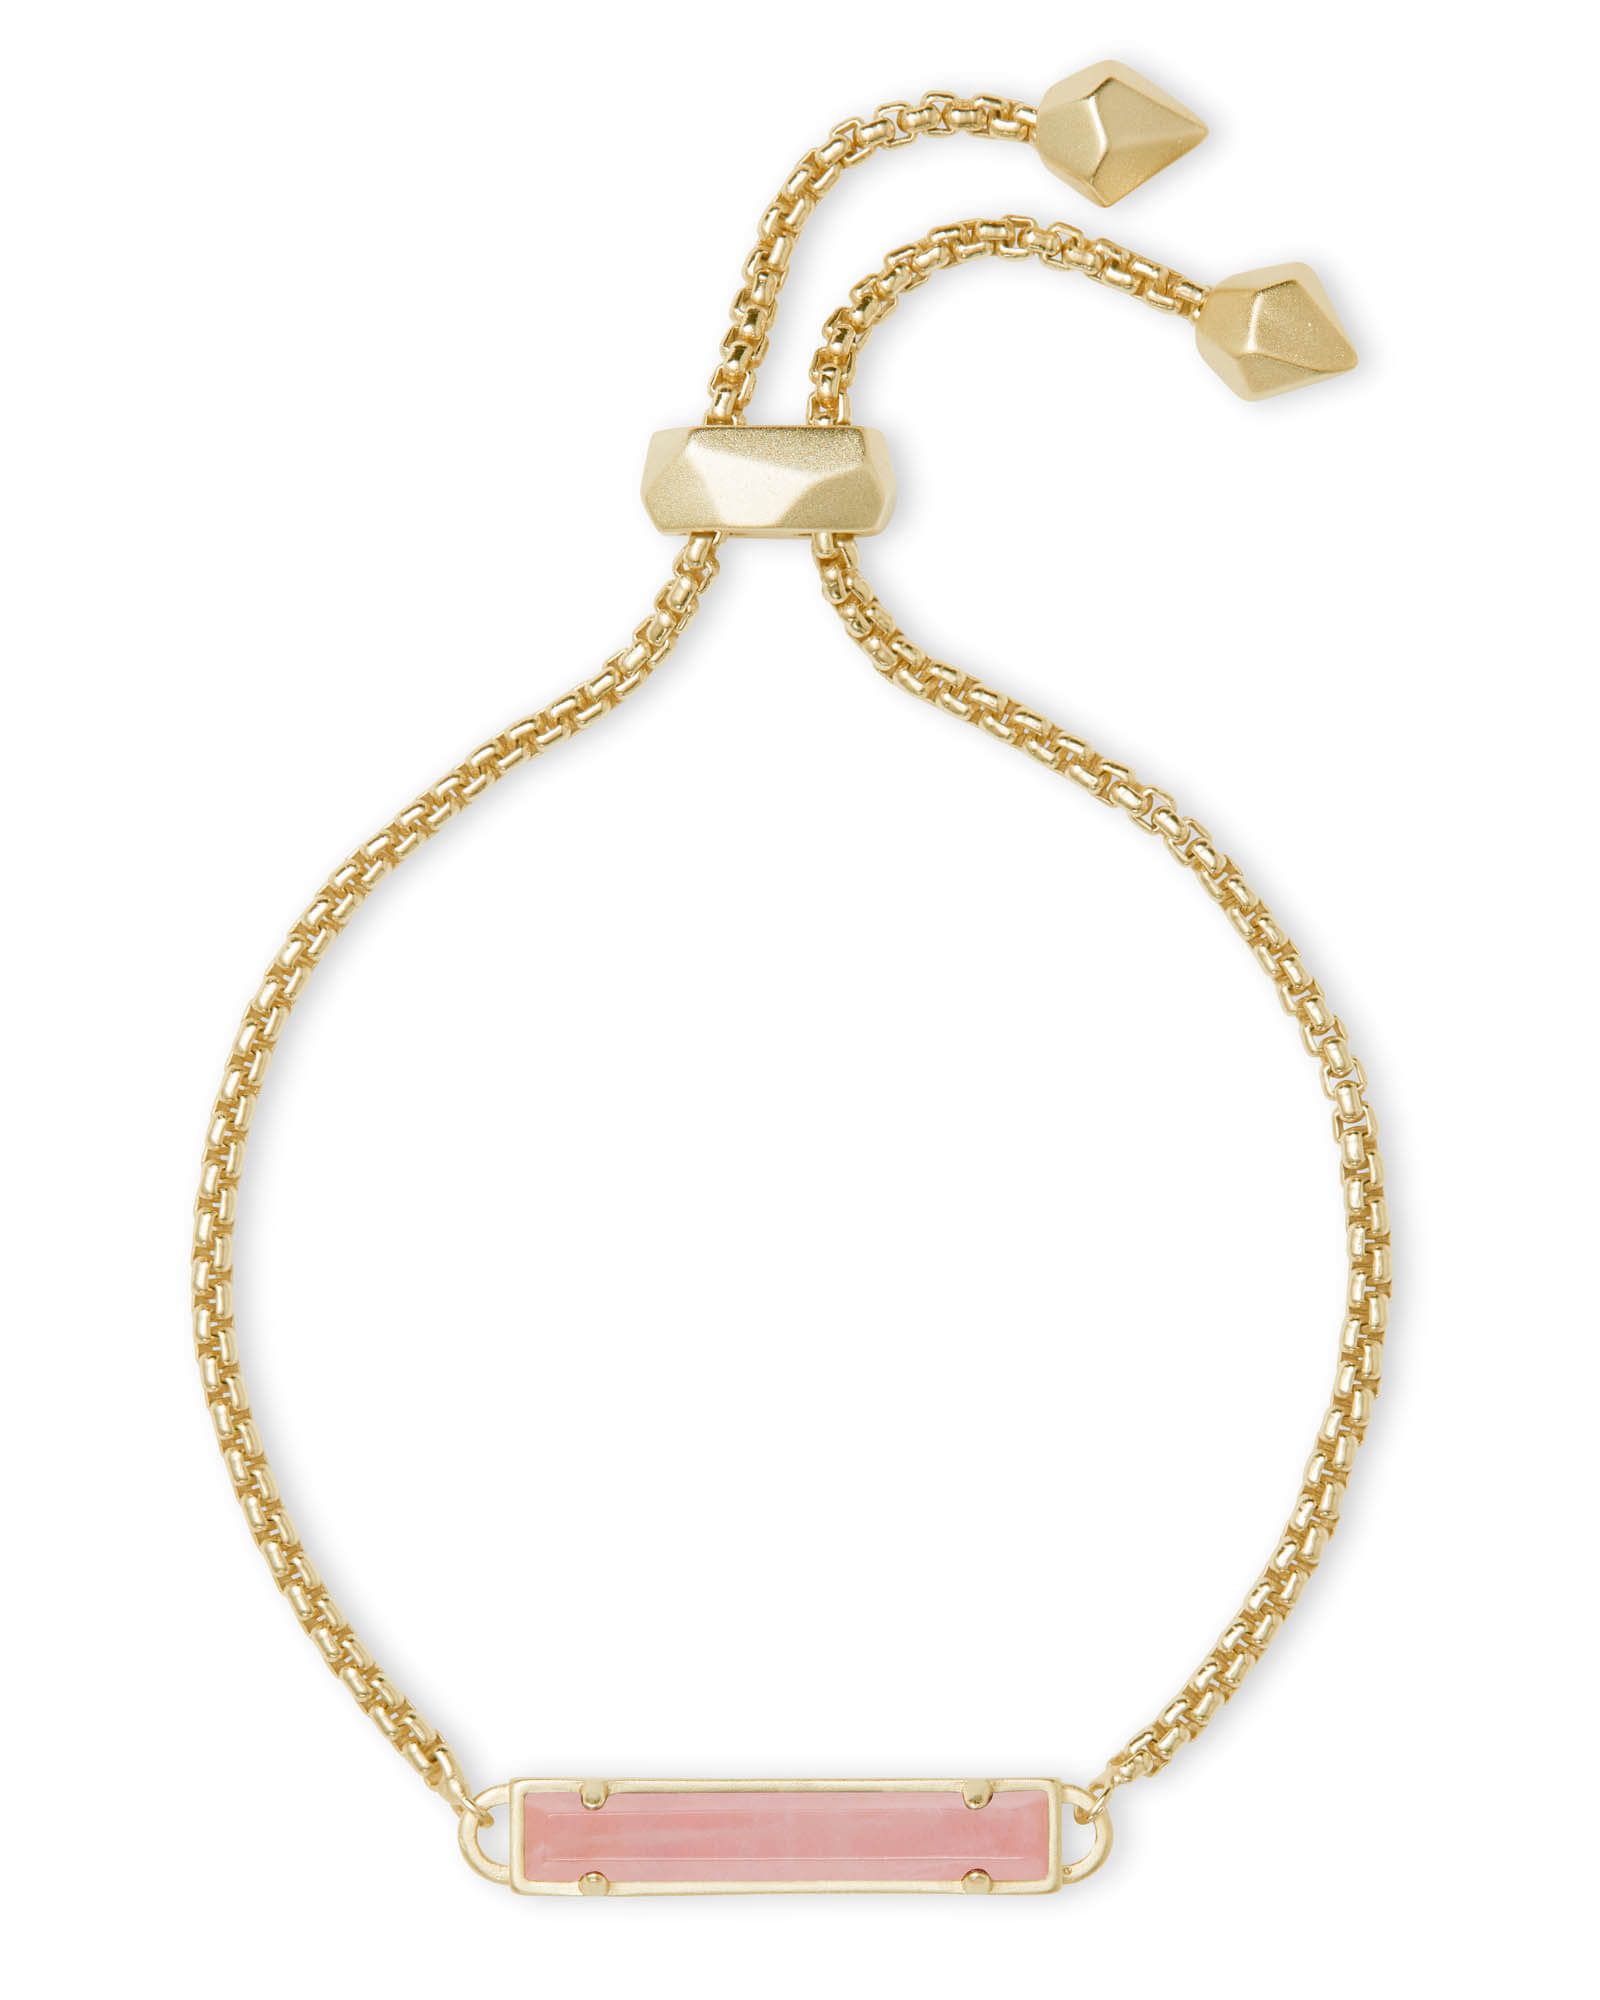 Stan Gold Adjustable Chain Bracelet in Rose Quartz | Kendra Scott